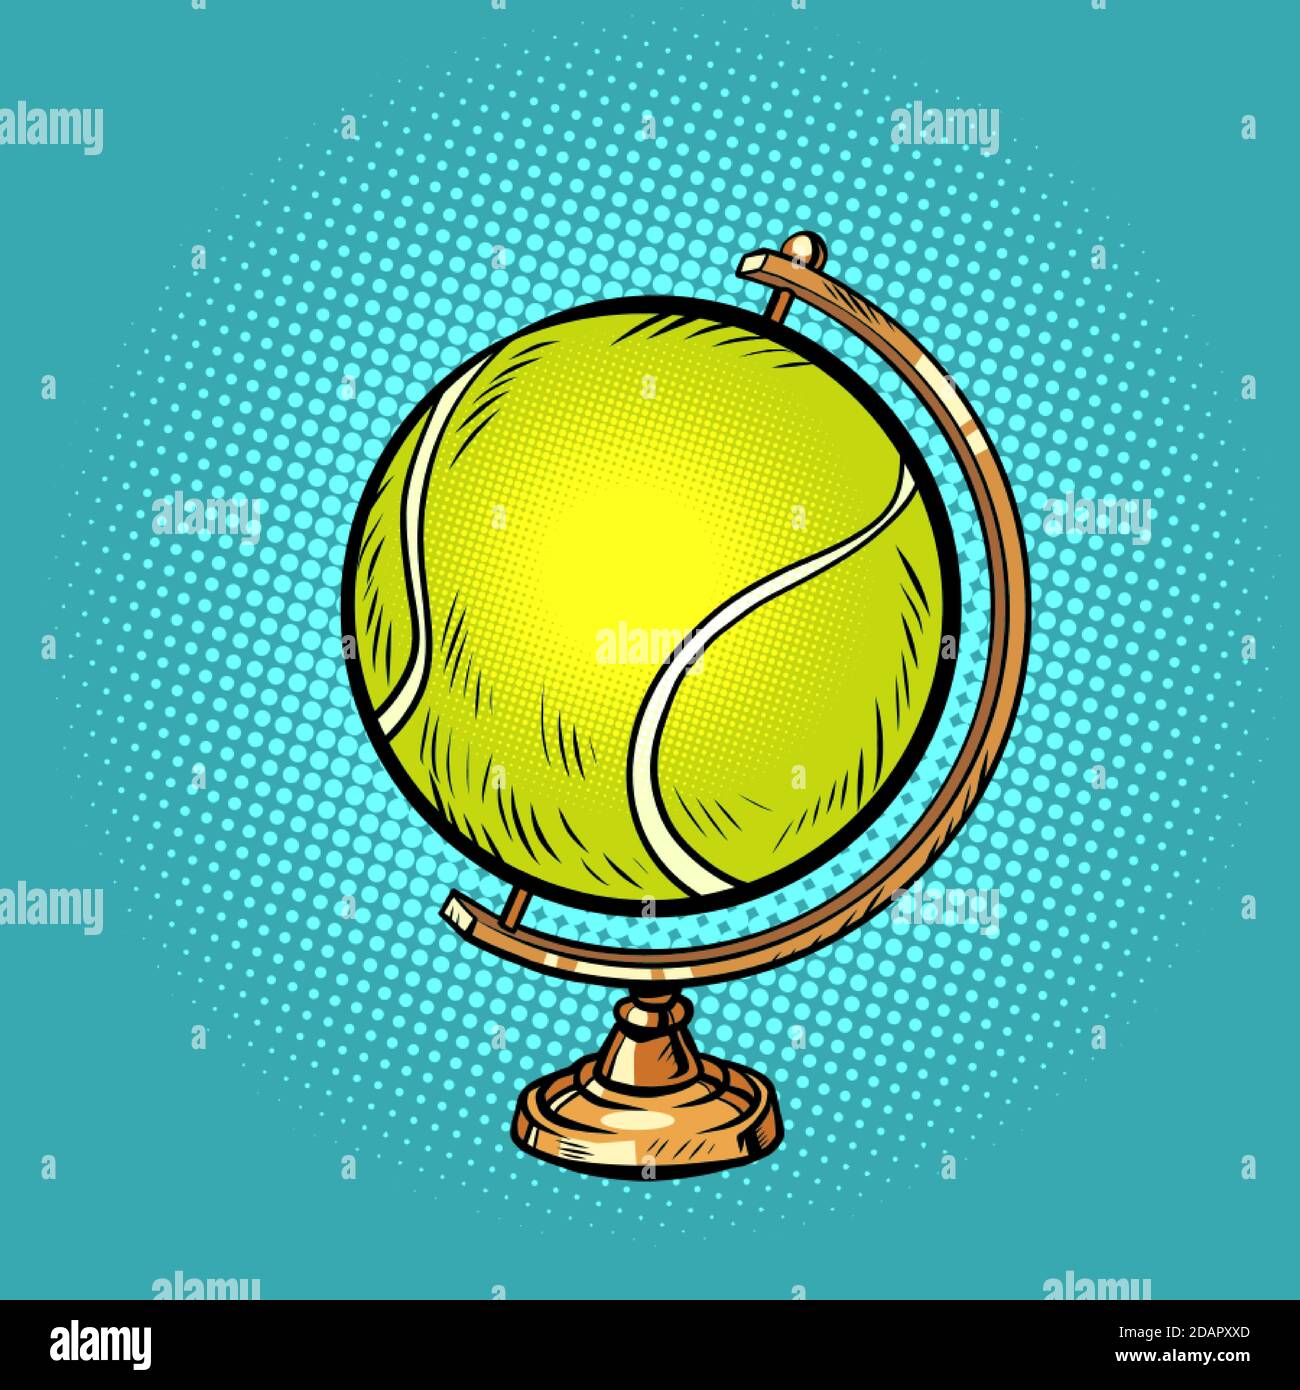 globe international tennis ball sports equipment Stock Vector